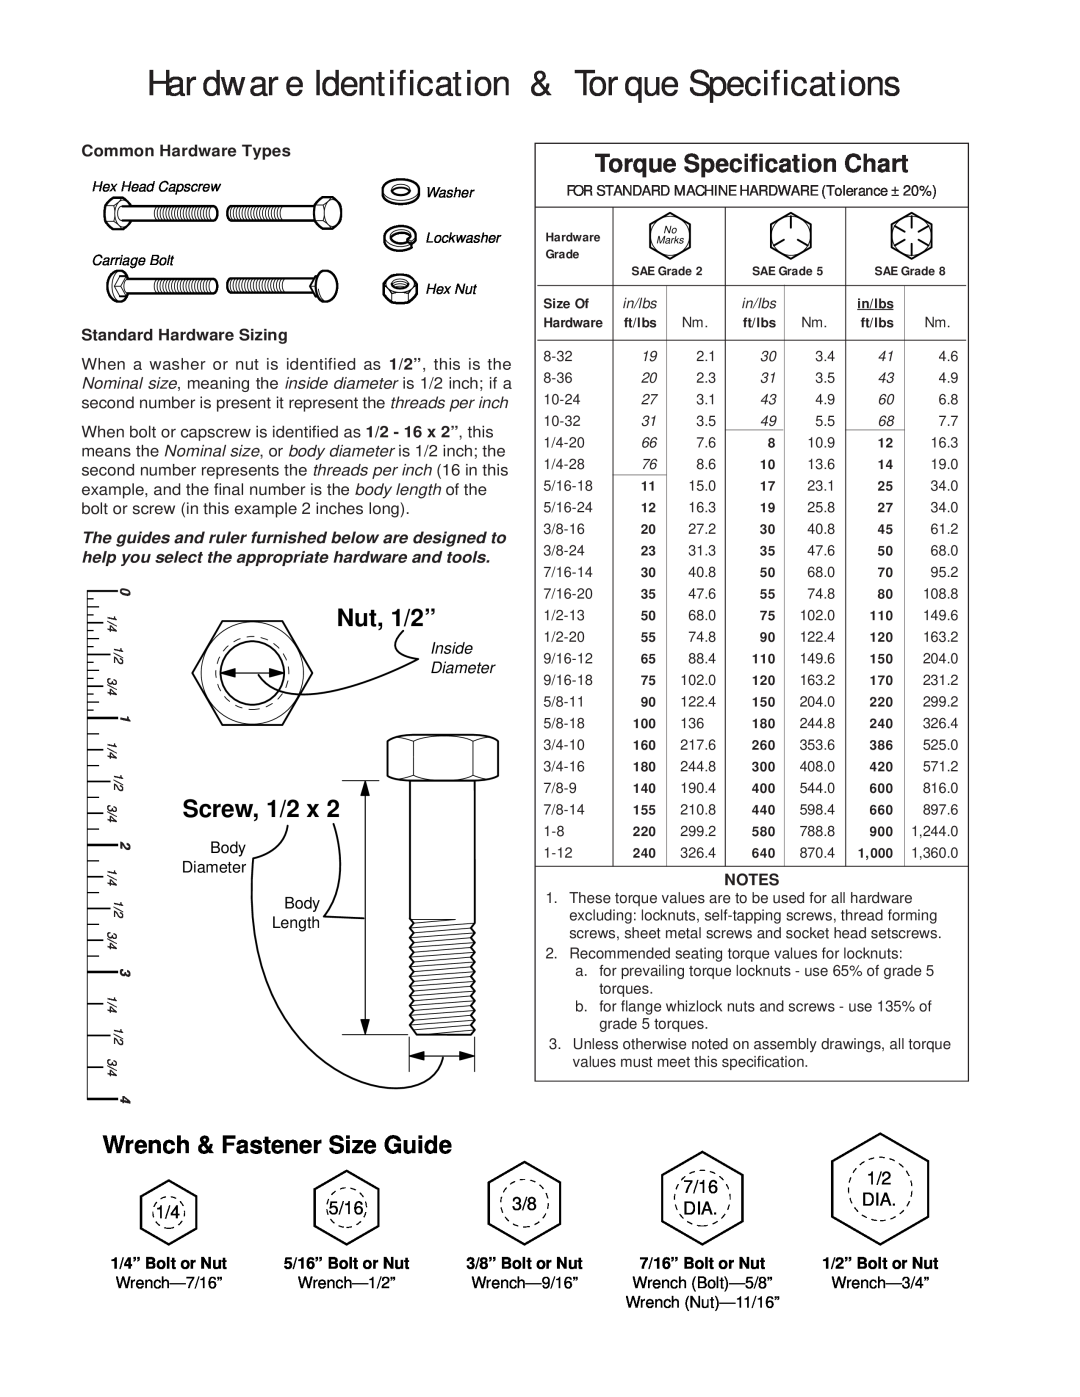 Simplicity 1692902 6/14E manual Hardware Identification & Torque Specifications, Torque Specification Chart, Nut, 1/2” 